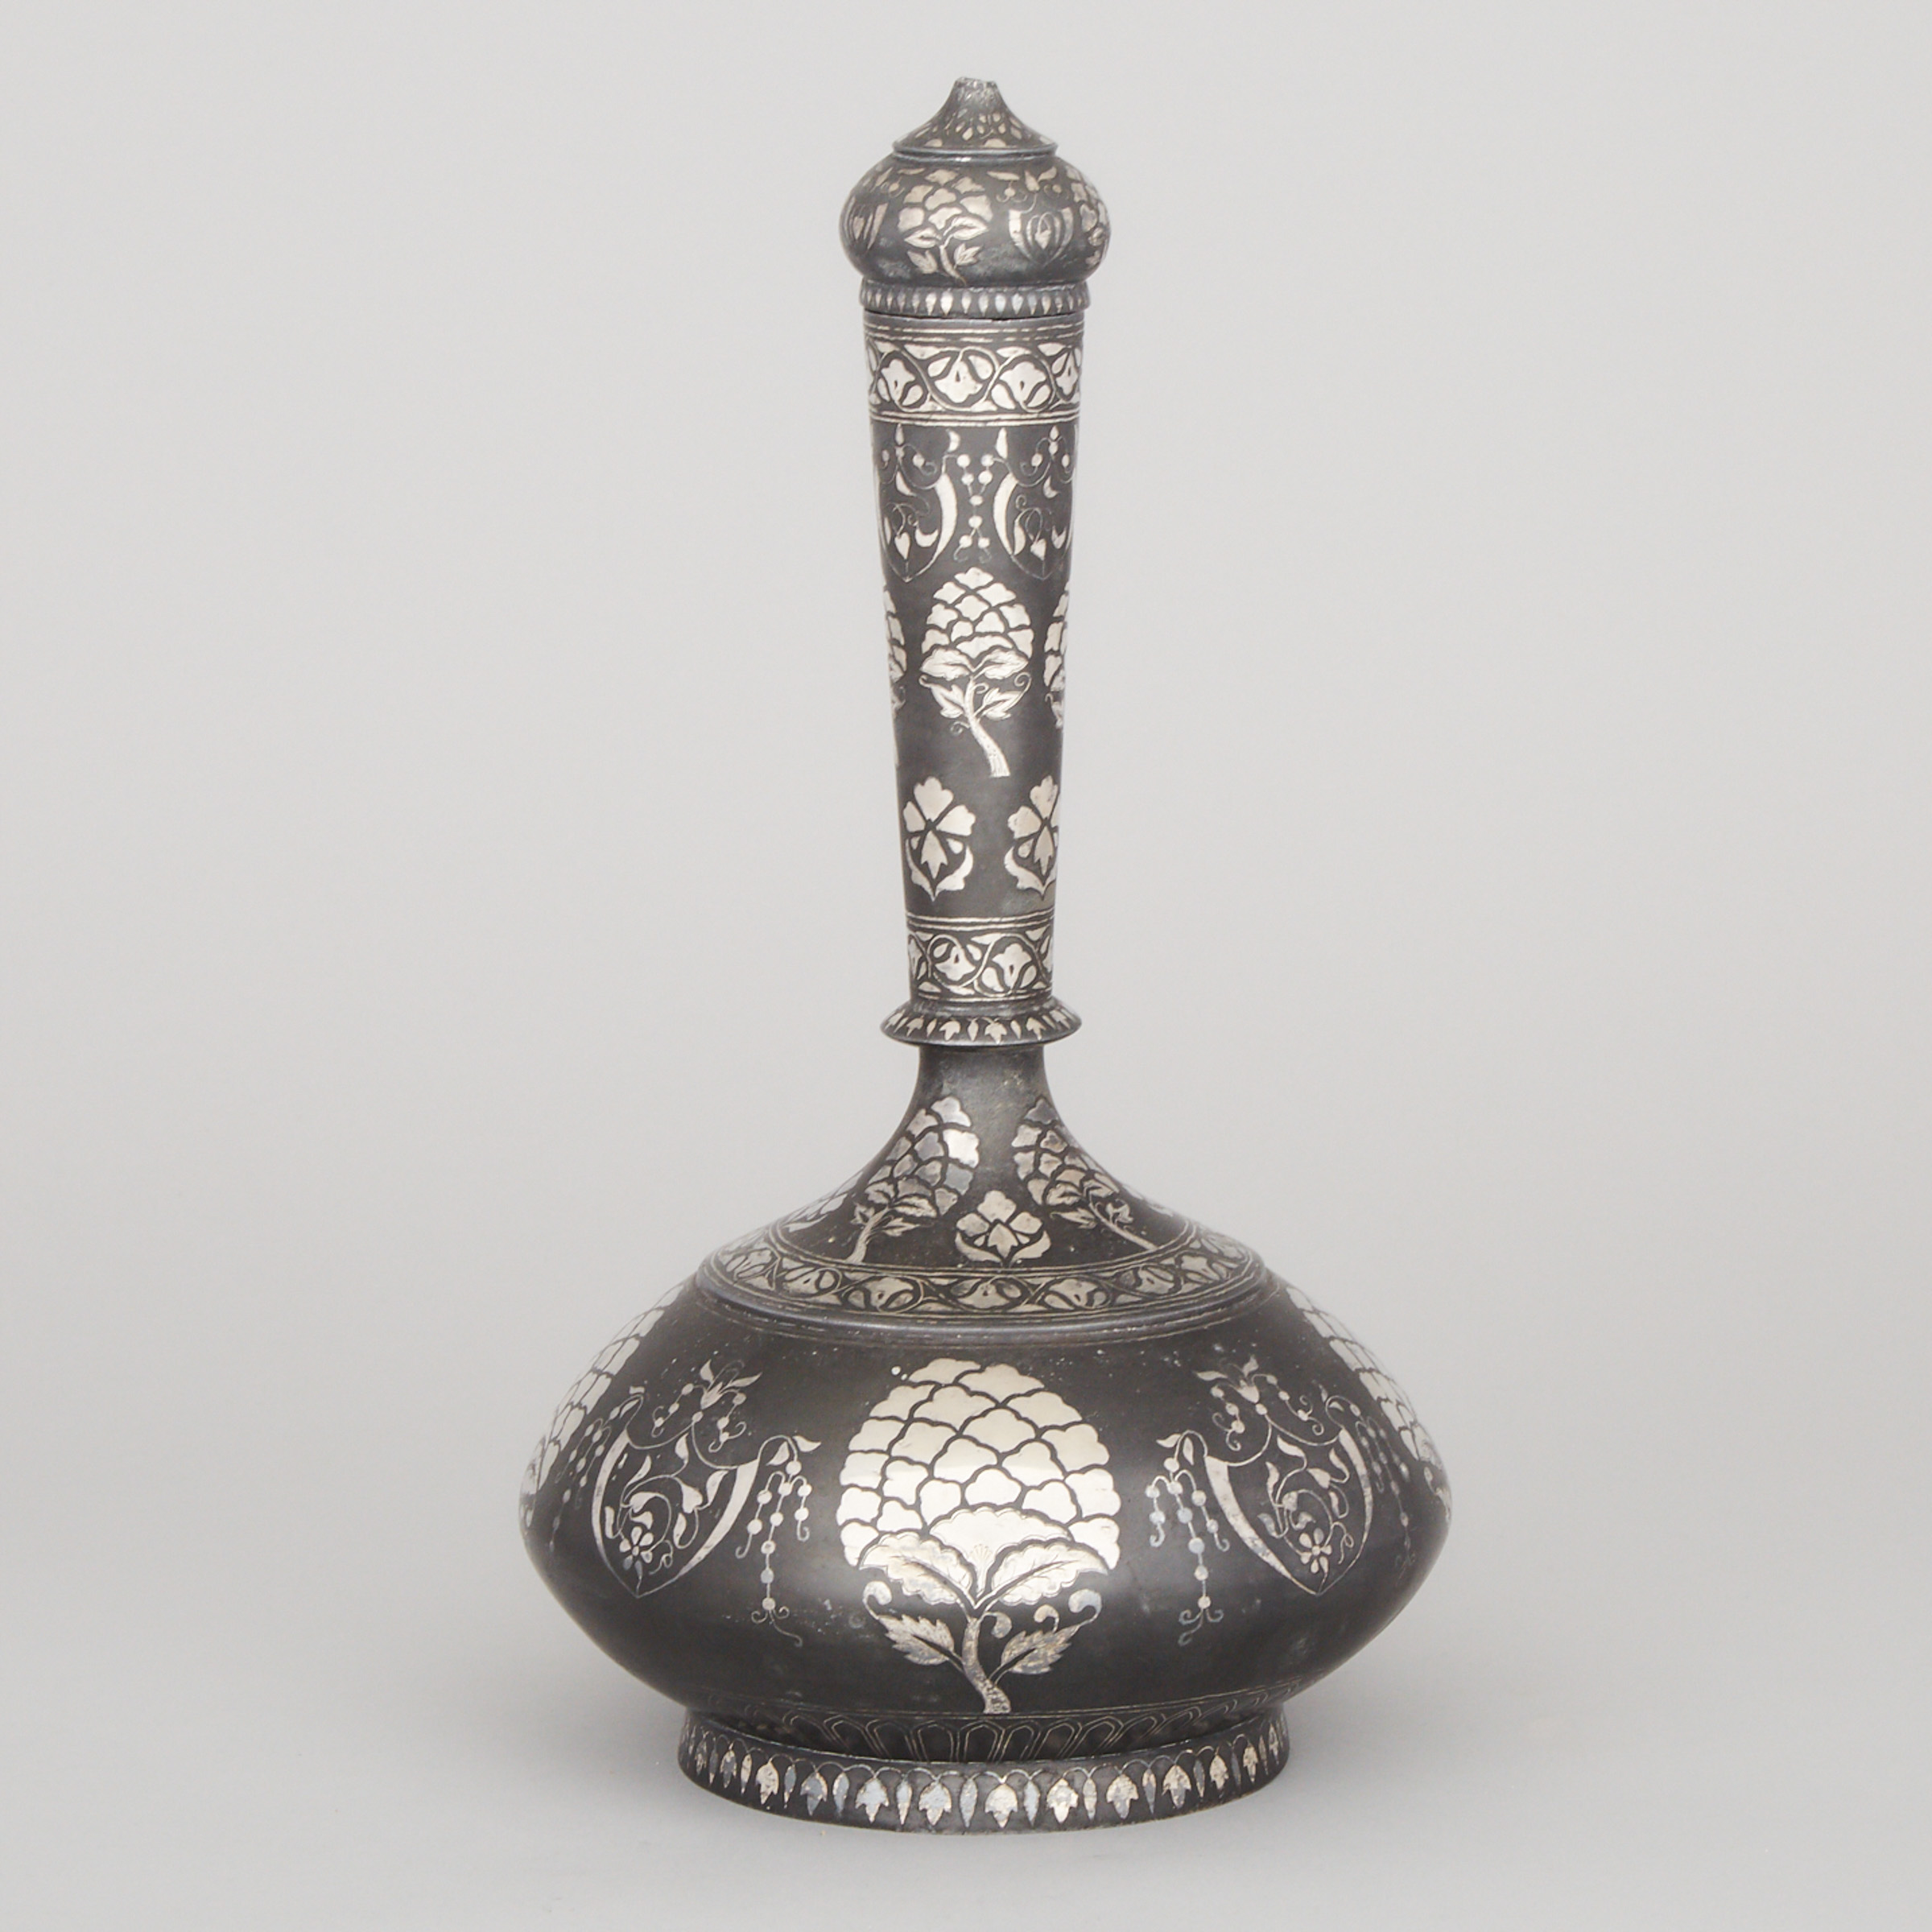 Indo-Persian Silver Inlaid Bidri Covered Bottle Vase, Bidar, India,  18th/19th century